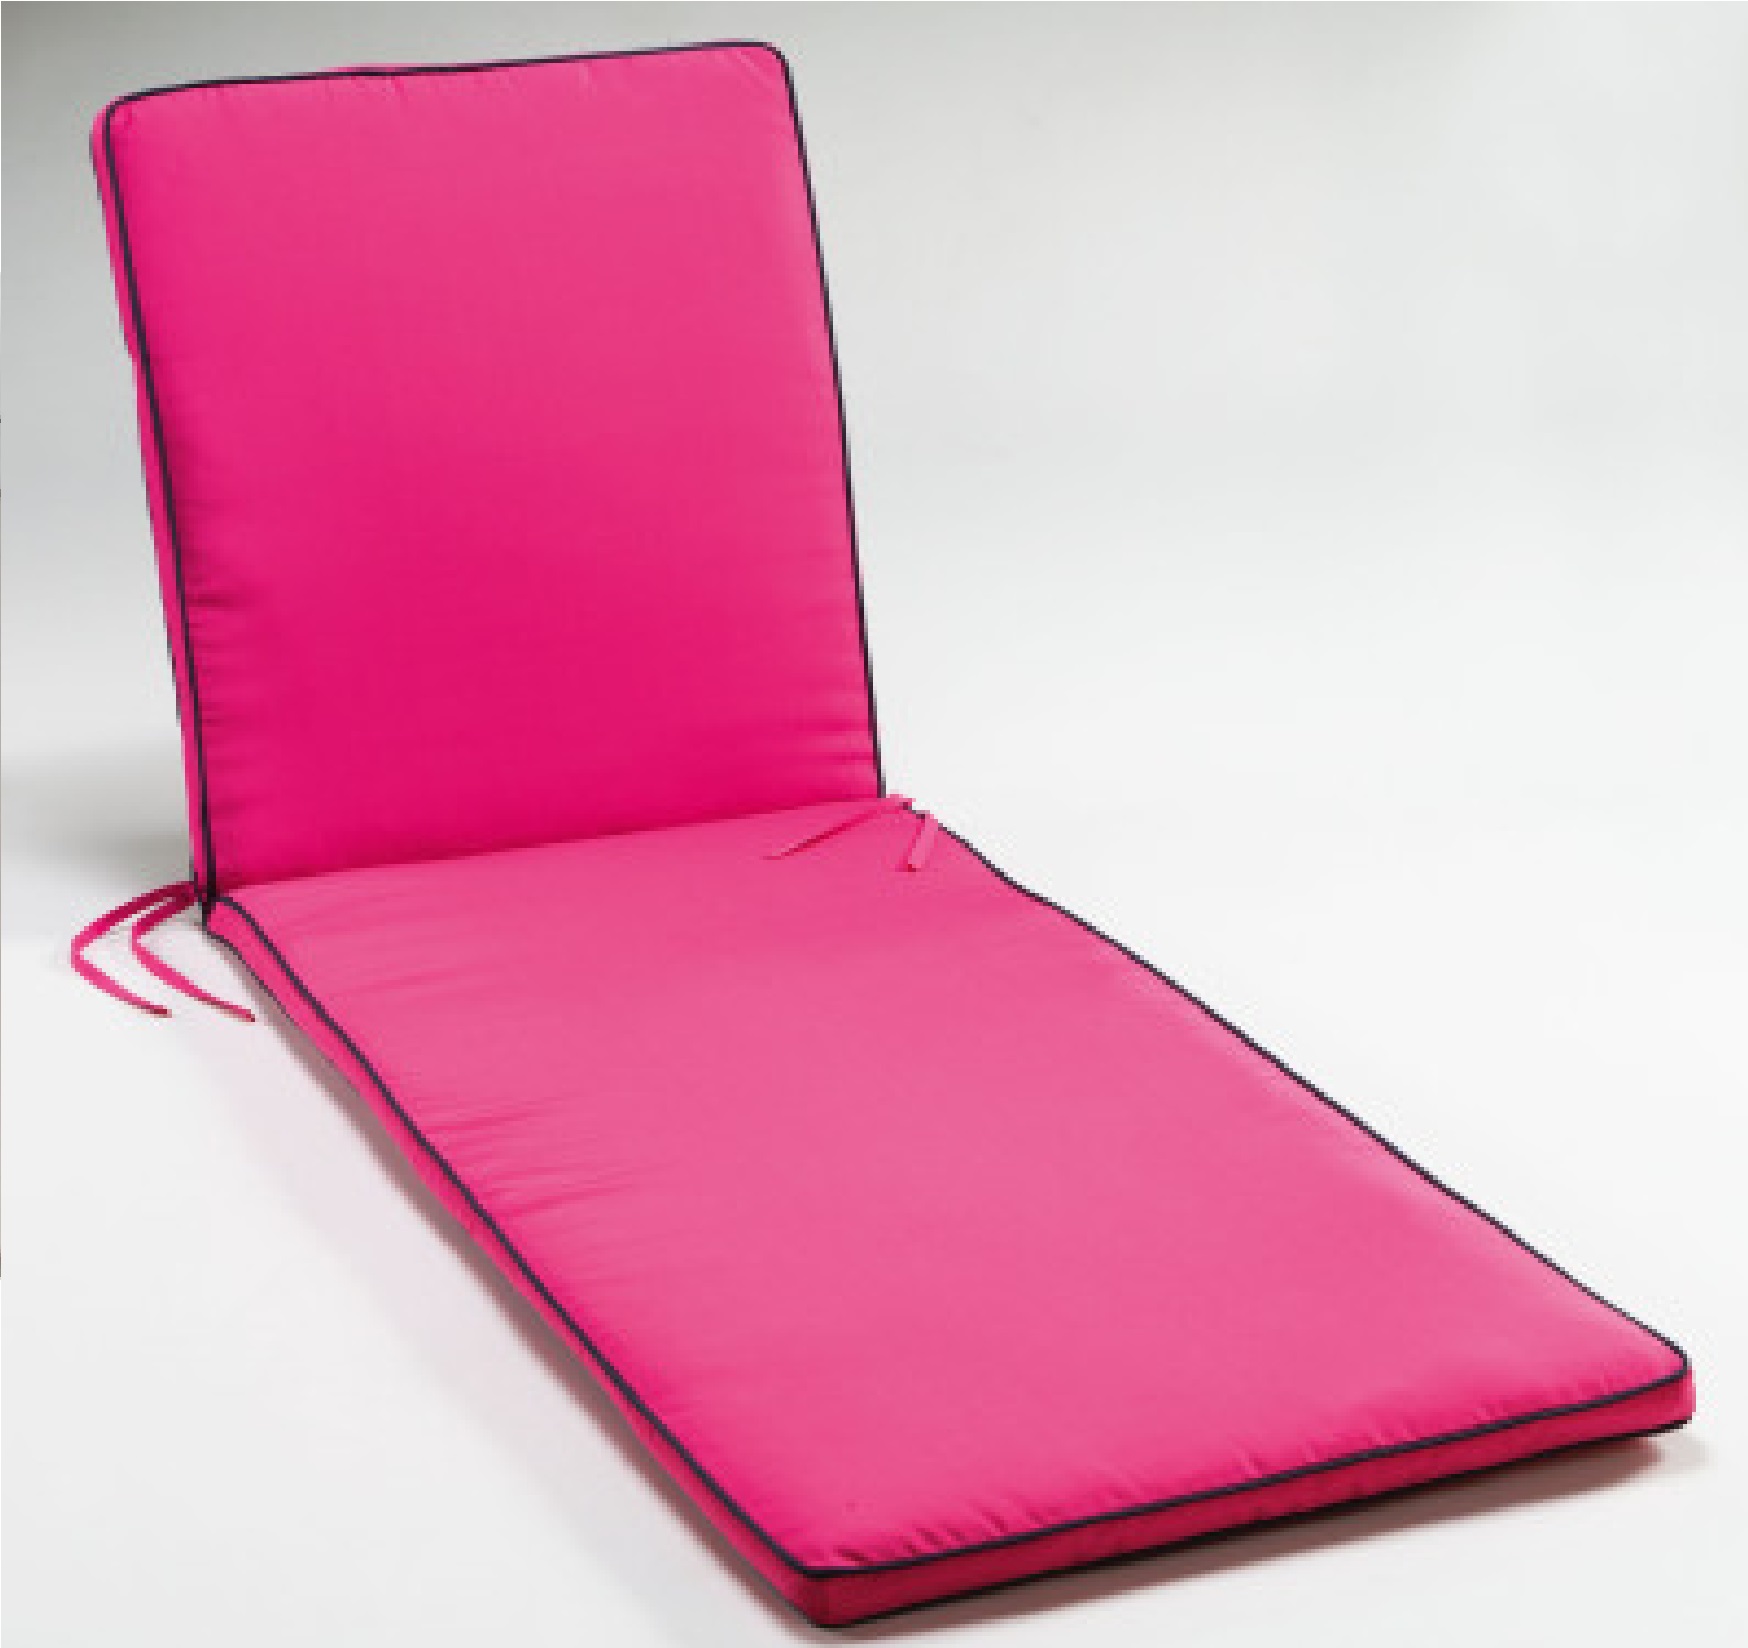 Matelas pour bain de soleil bicolore rose / Anthracite 55 x 185 cm